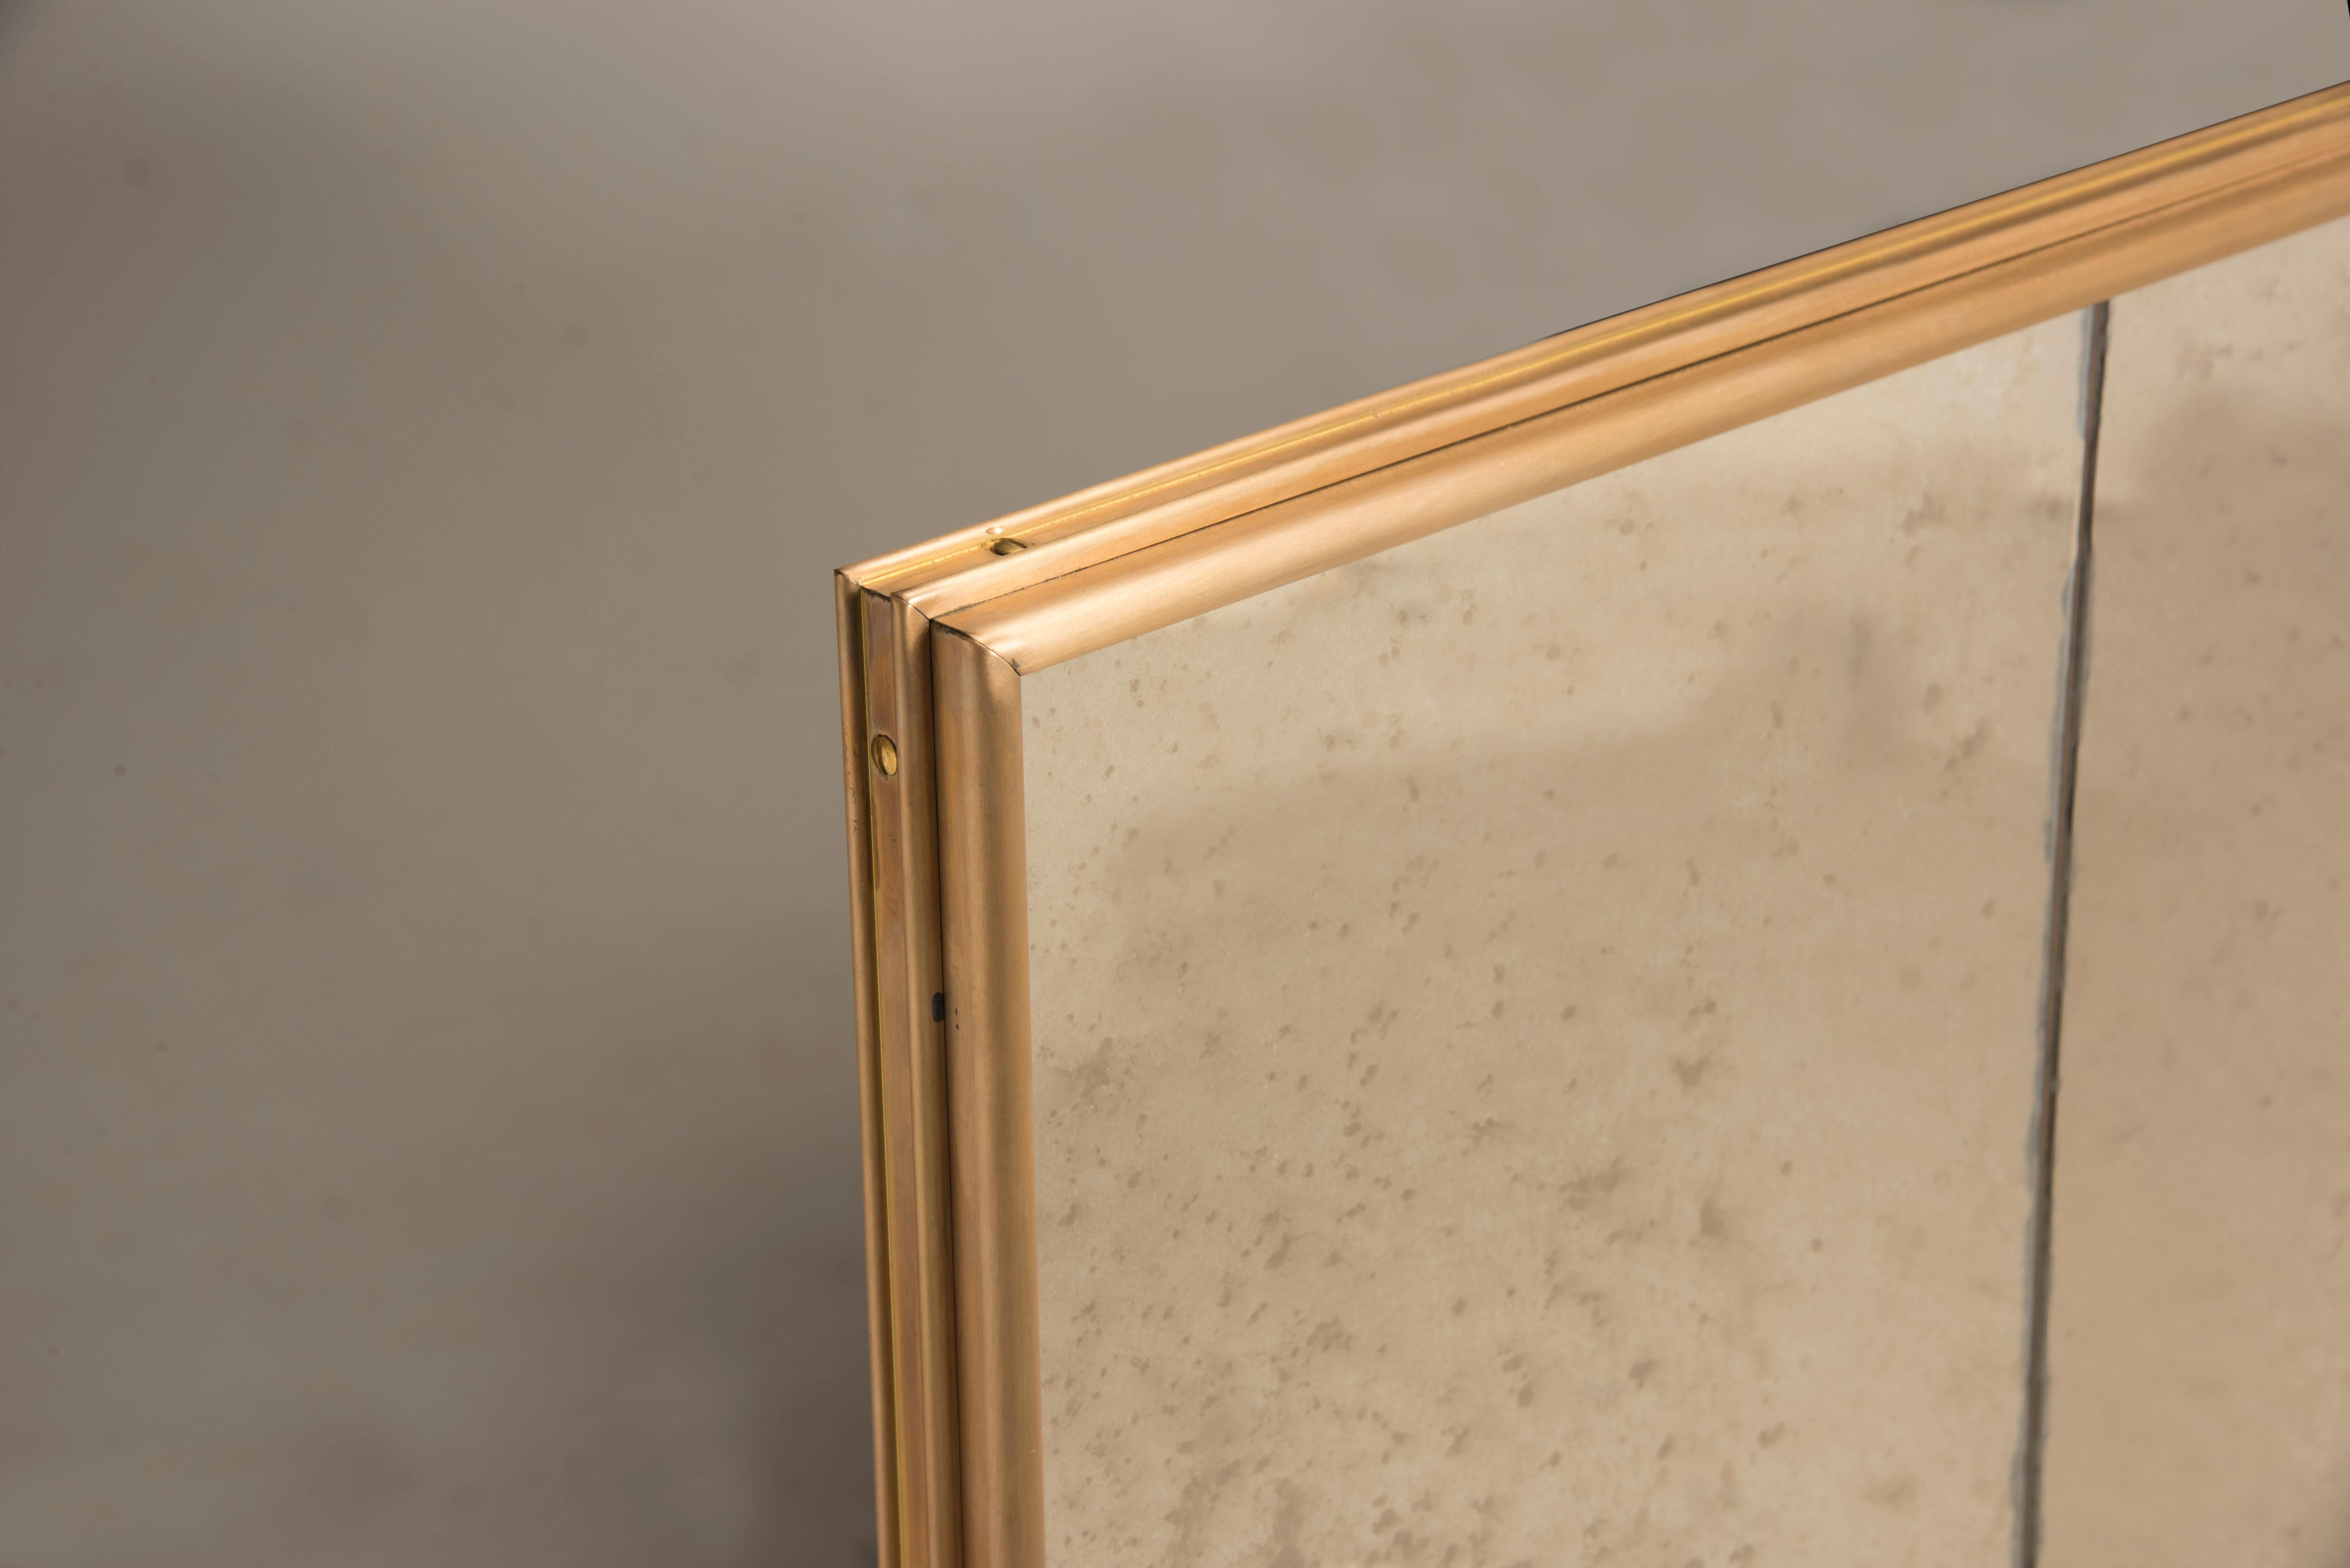 21st Century Rectangular Art Deco Style Paneled Brass Distressed Mirror 120x220 For Sale 1